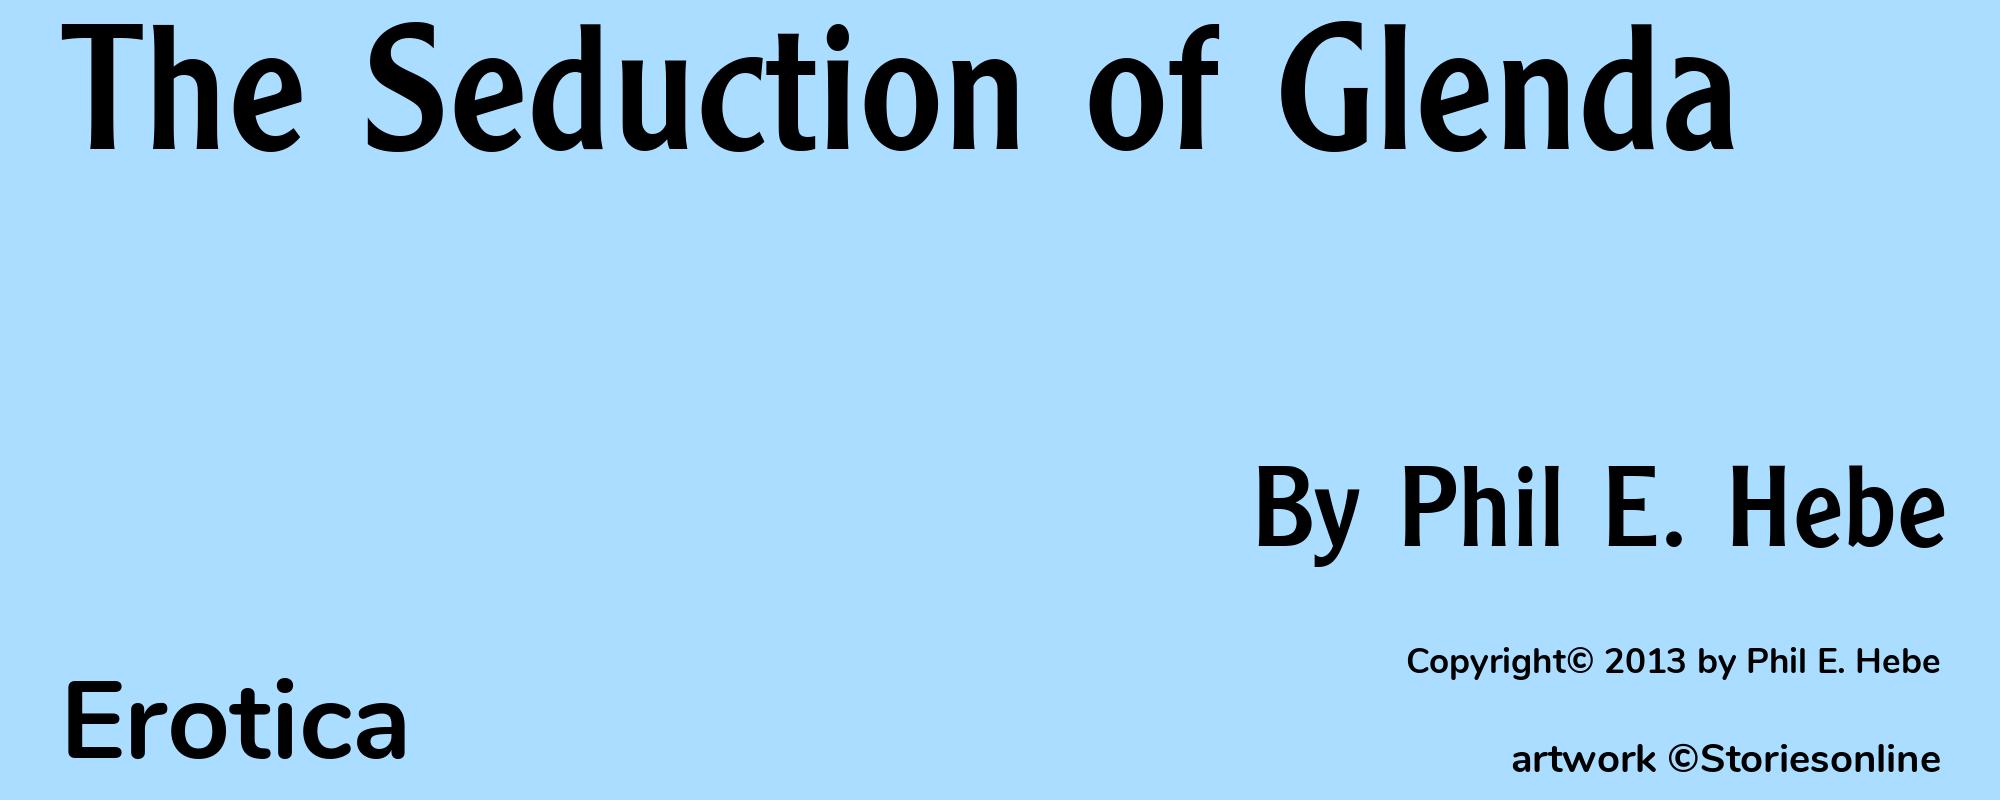 The Seduction of Glenda - Cover